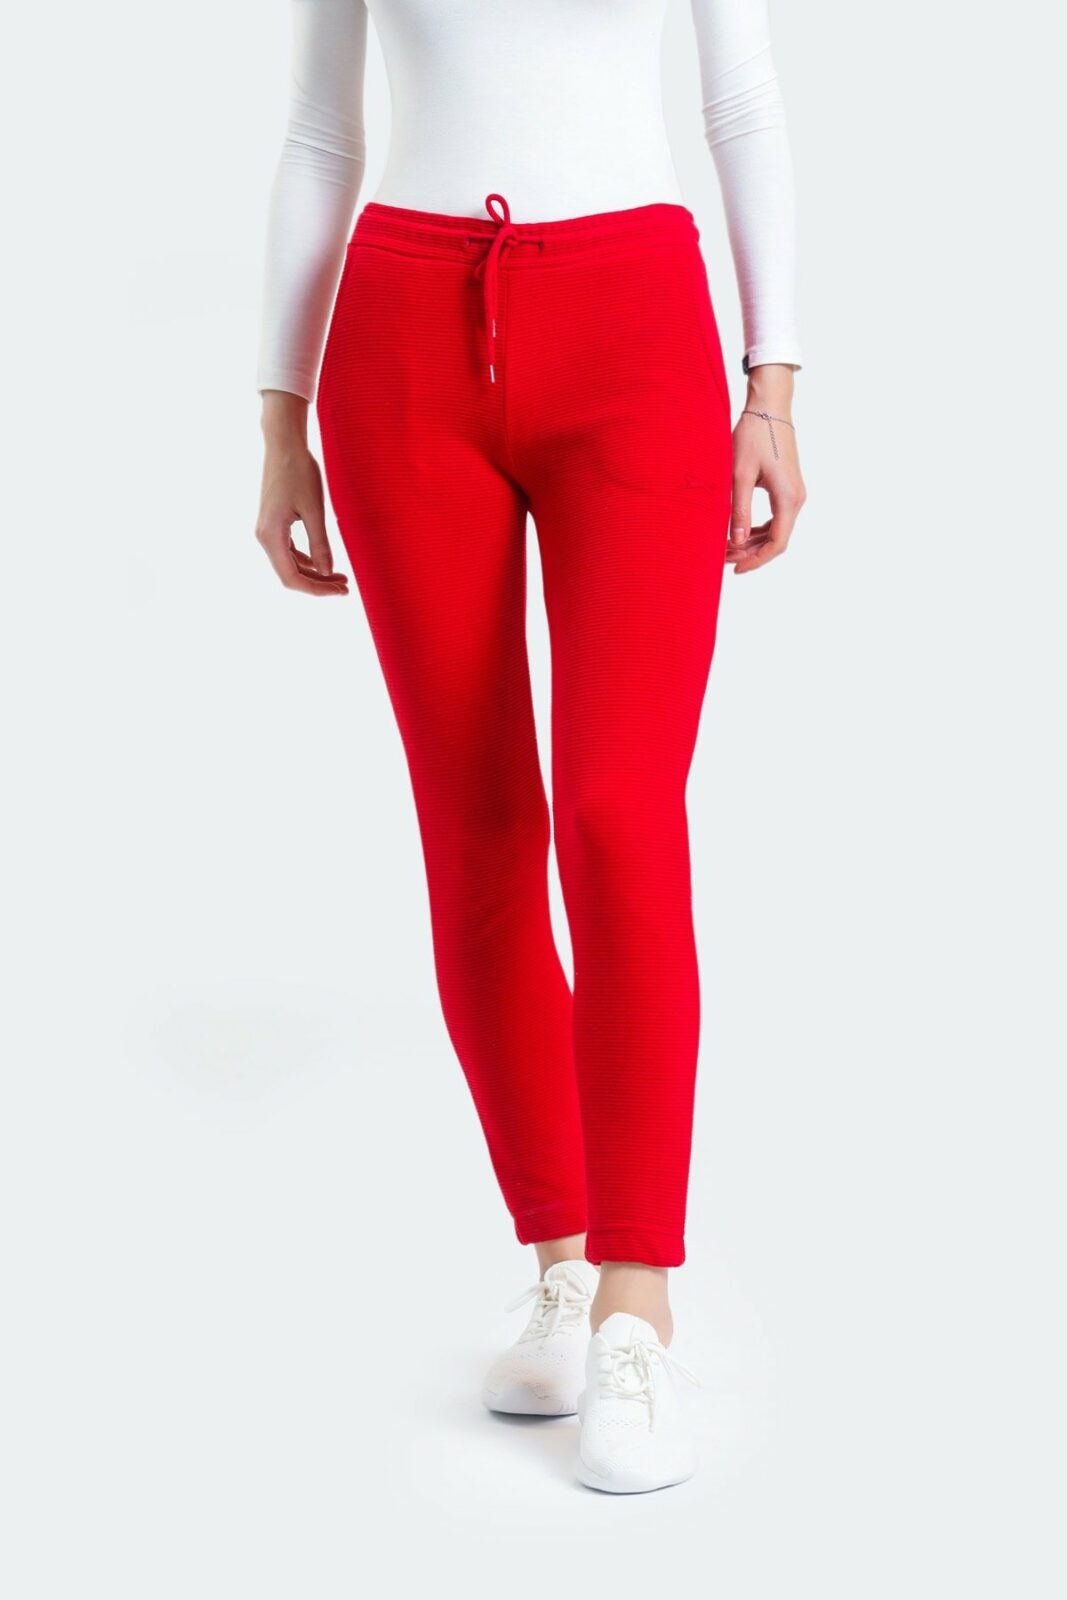 Slazenger Sweatpants - Red